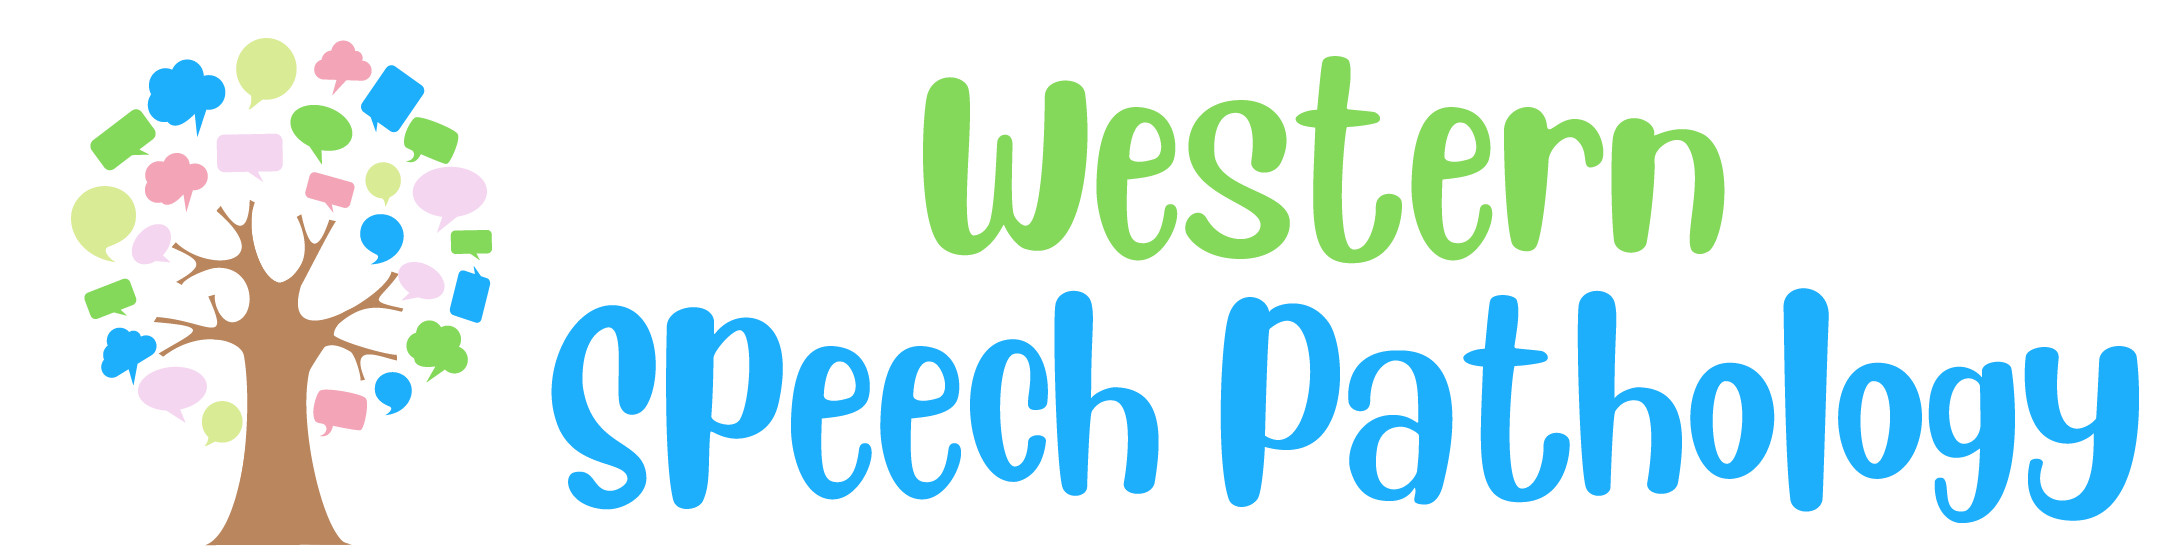 Western Speech Pathology